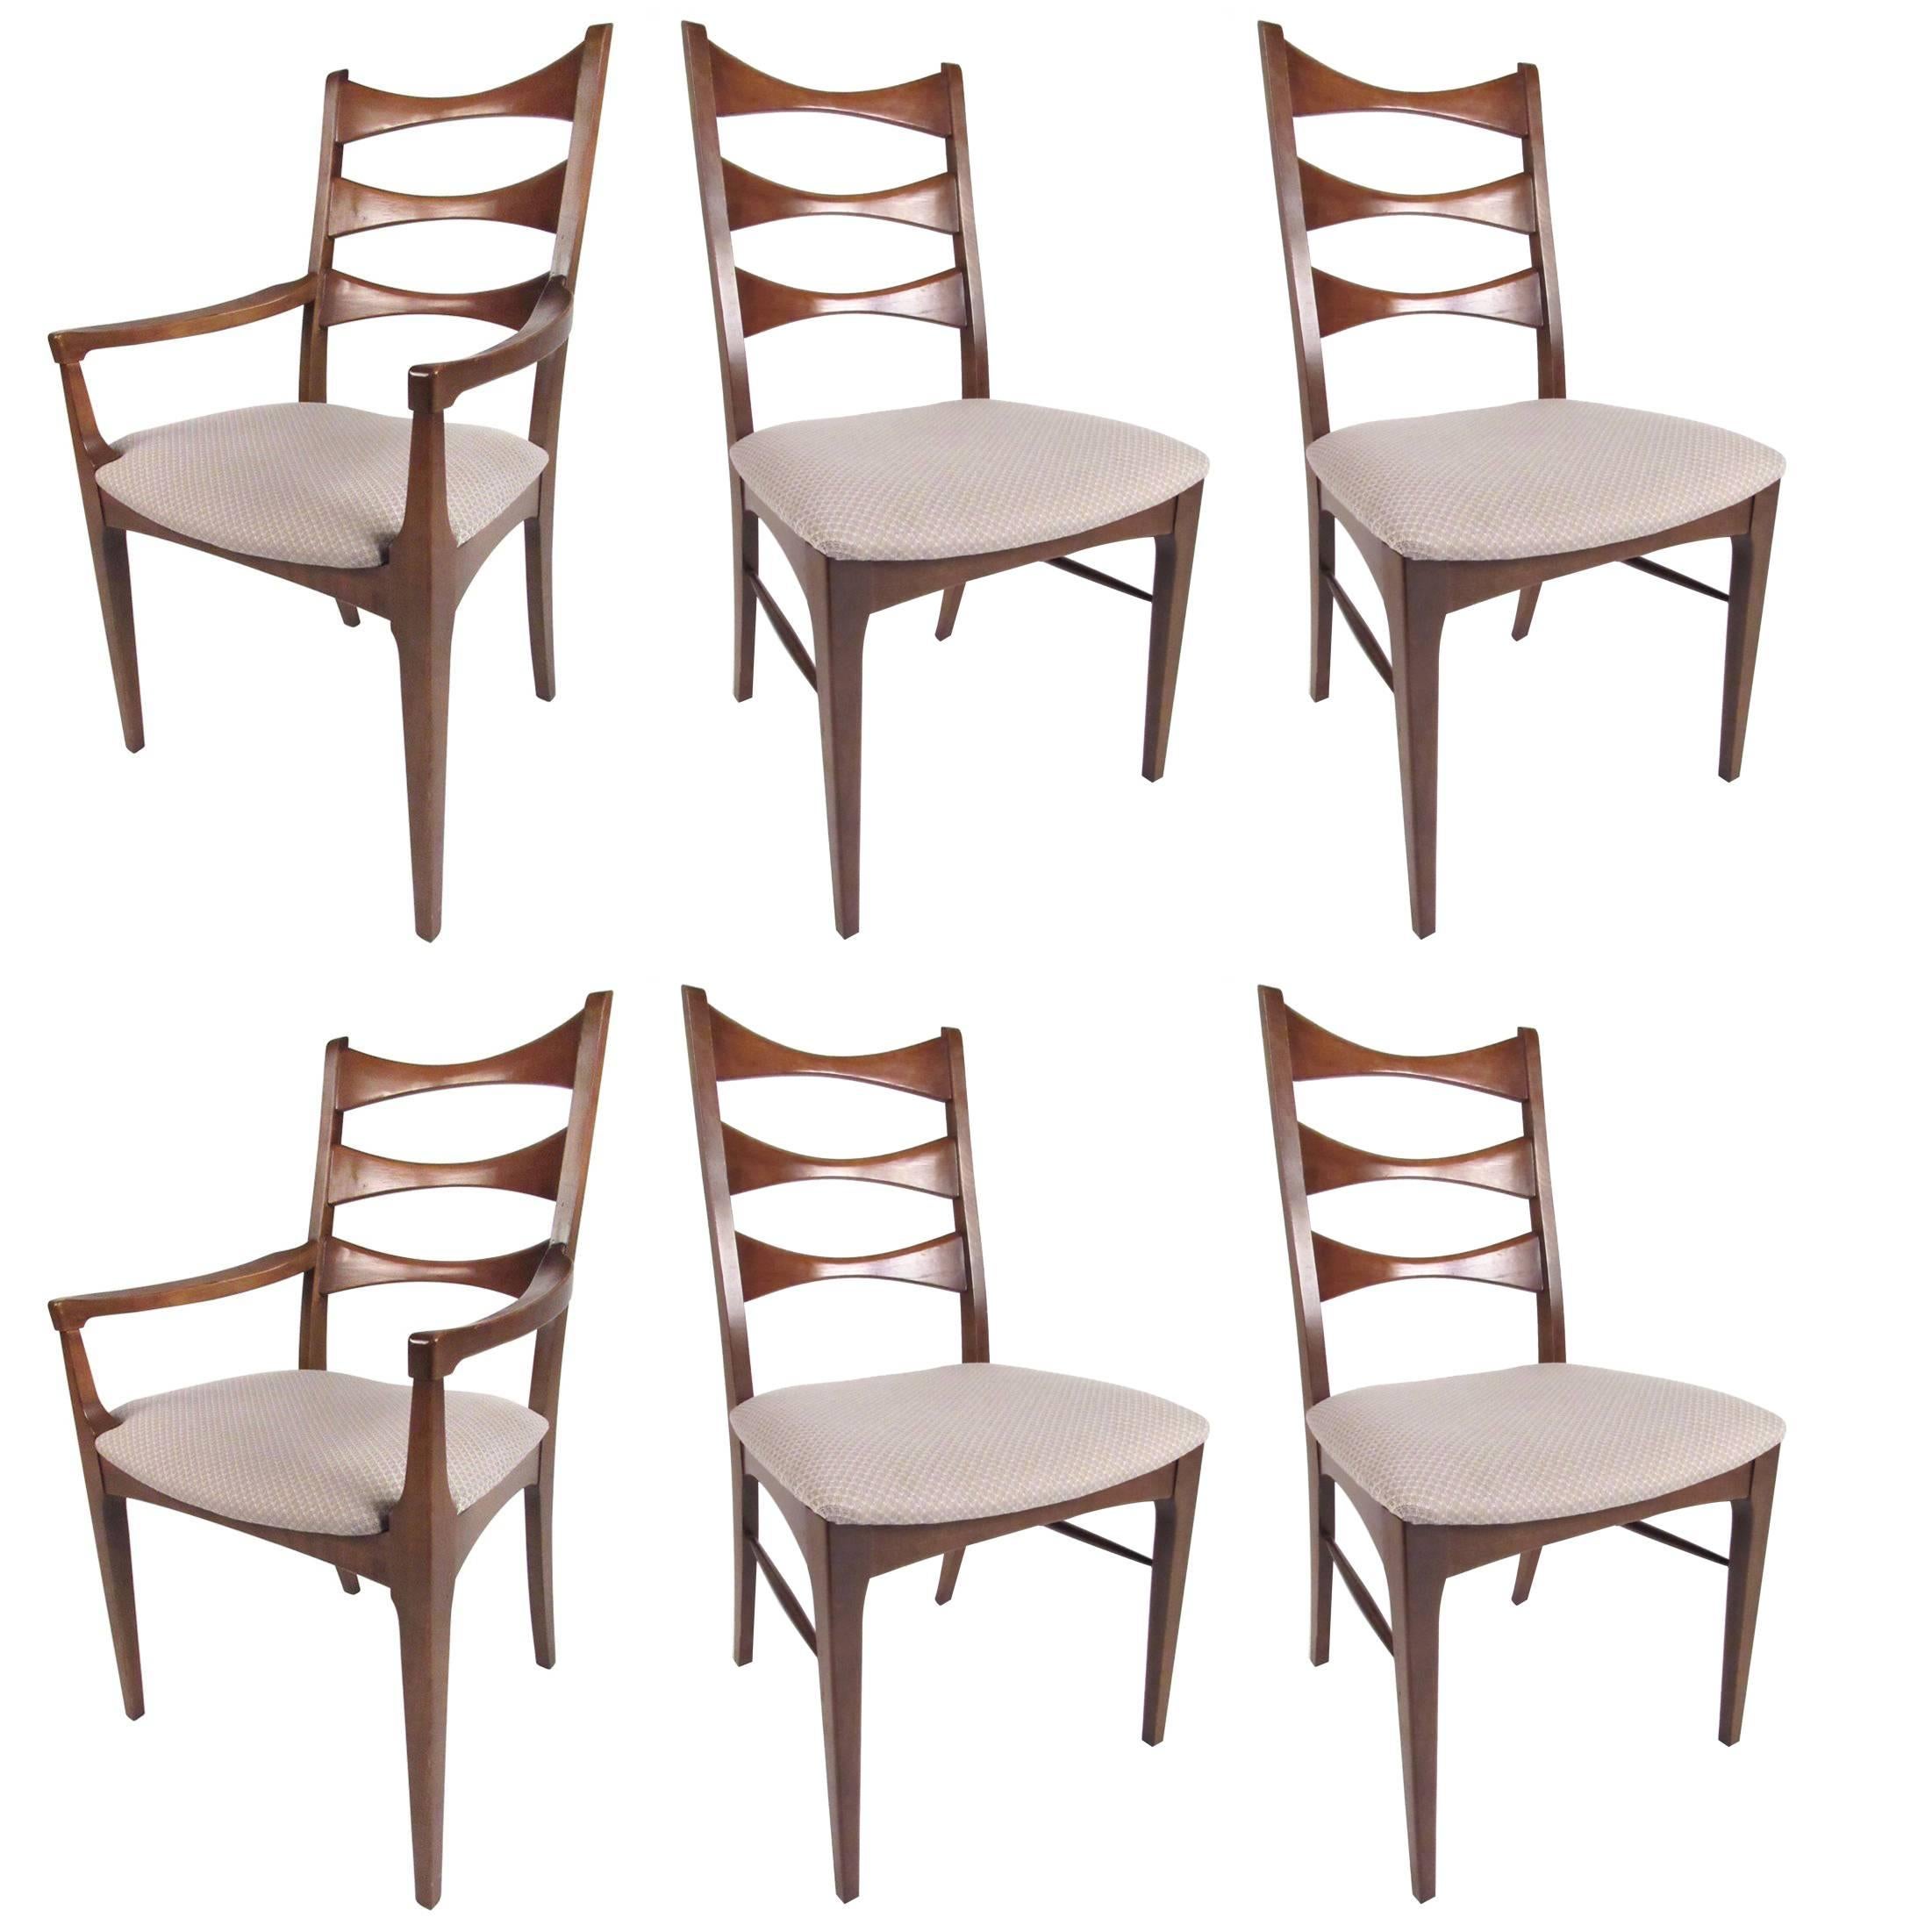 Set of Mid-Century American Walnut Dining Chairs